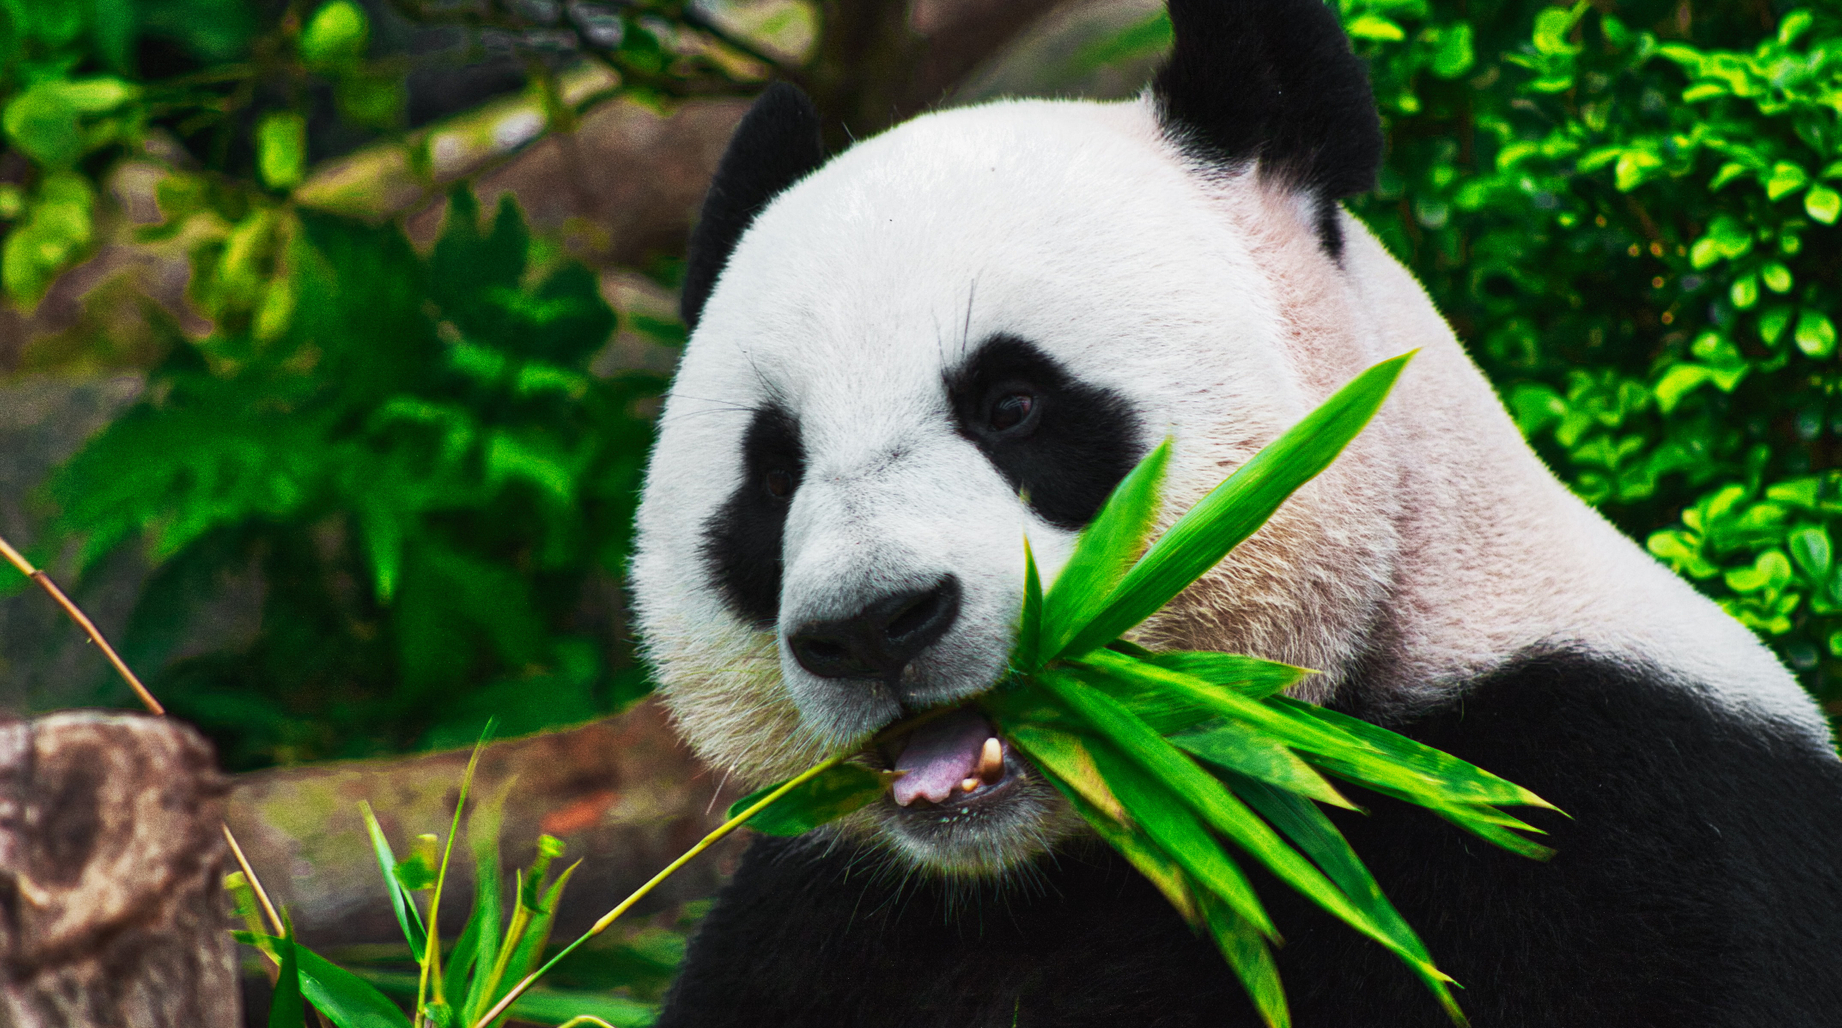 Panda bear eating bamboo leaves